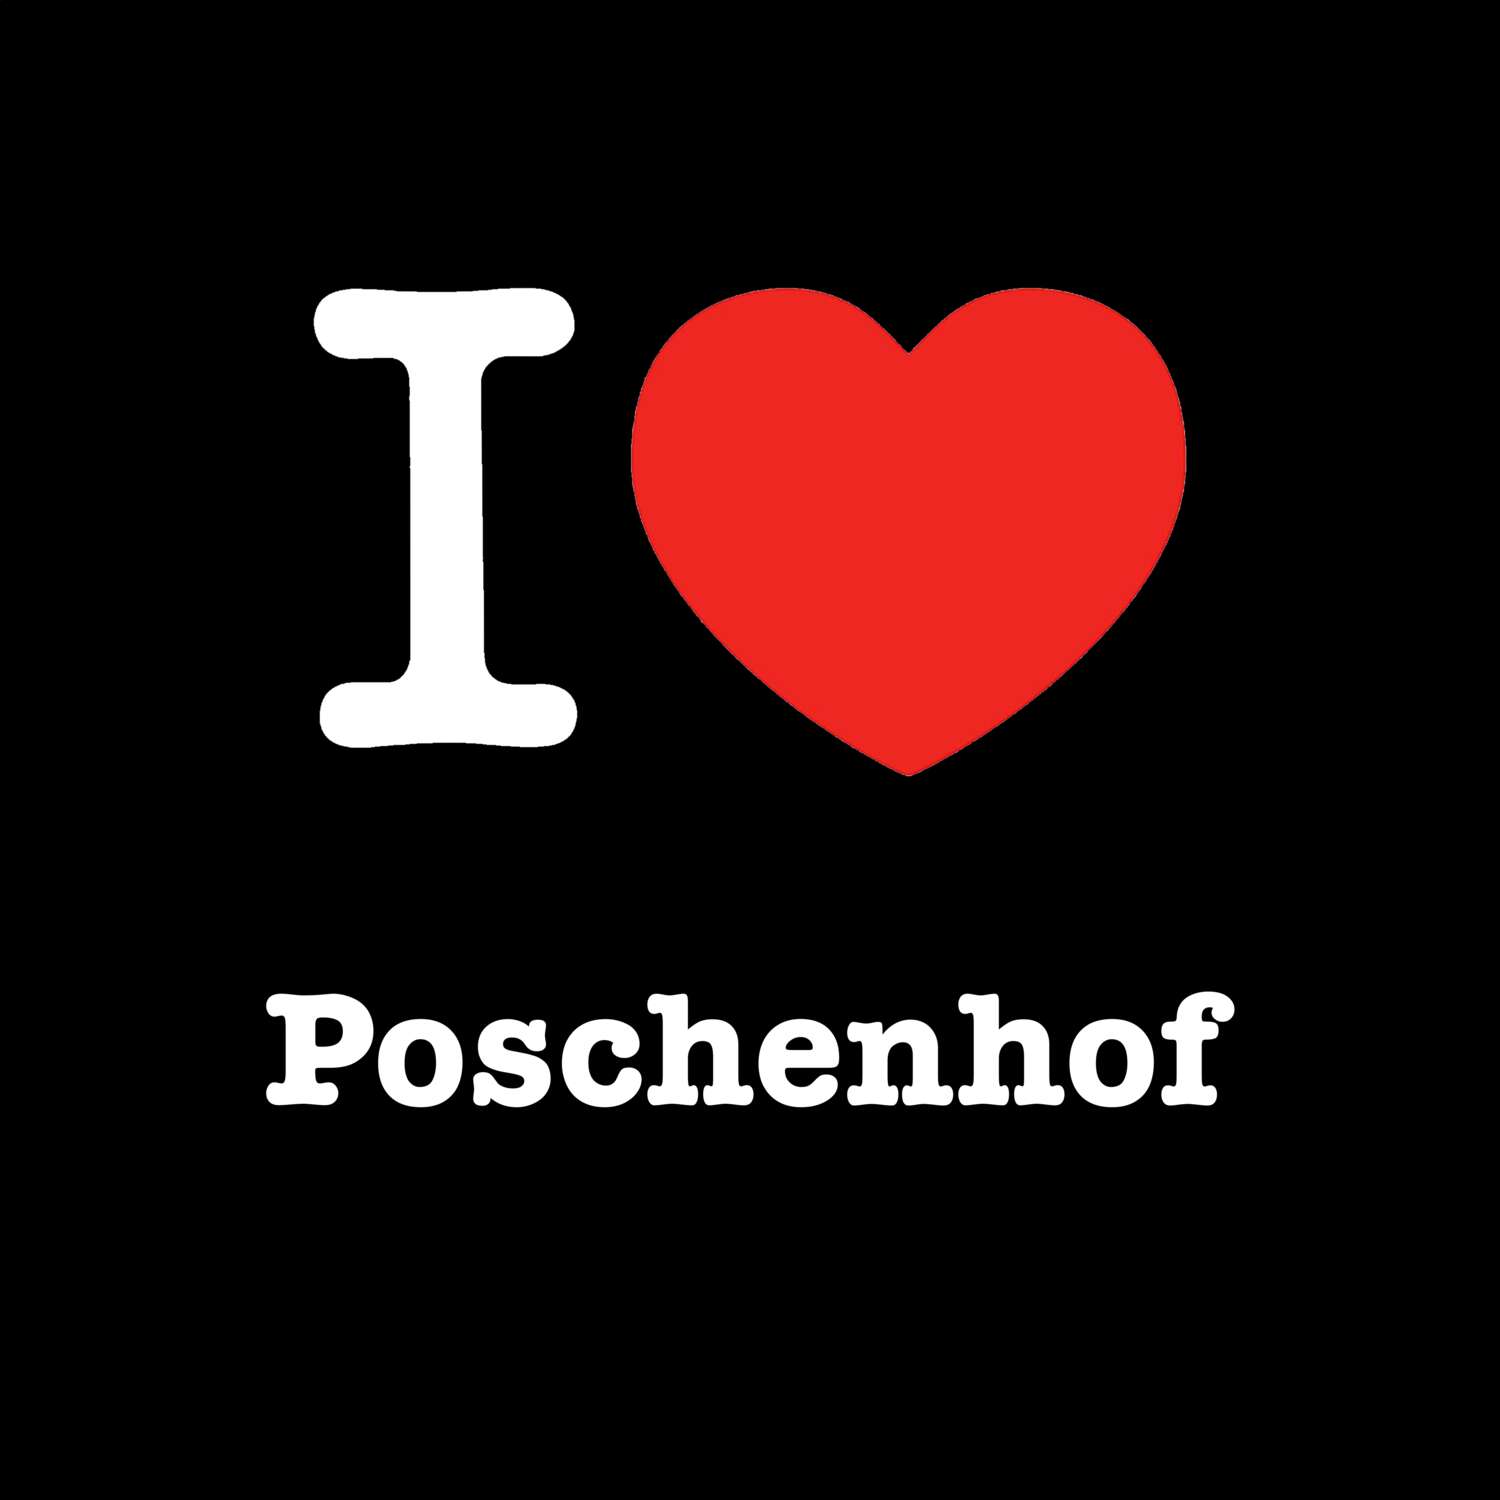 Poschenhof T-Shirt »I love«